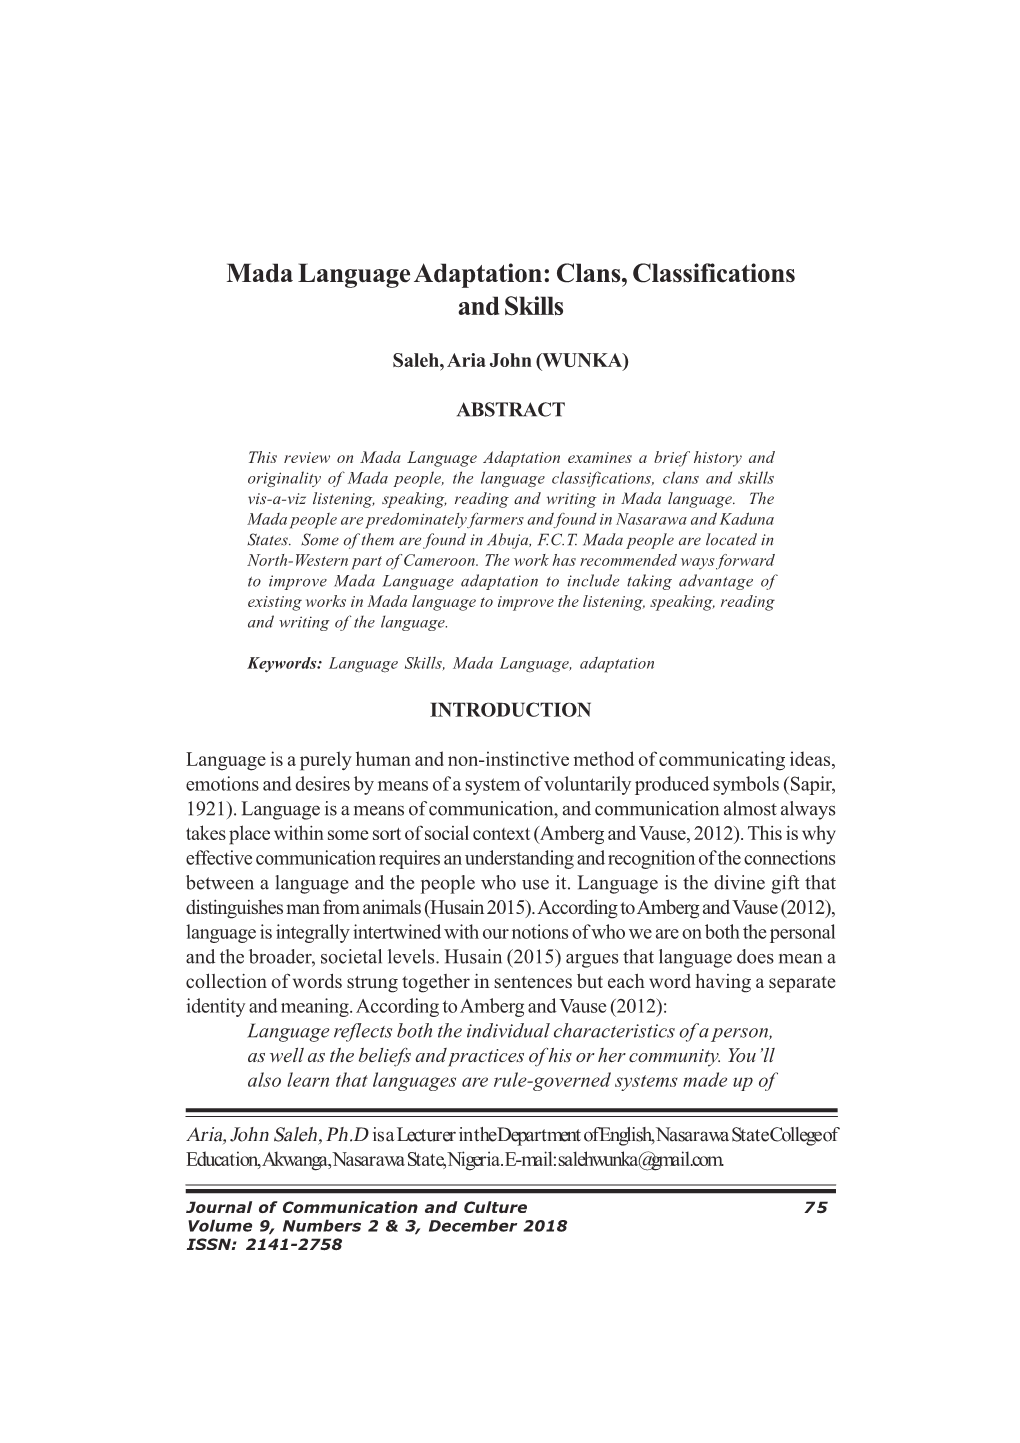 Mada Language Adaptation: Clans, Classifications and Skills